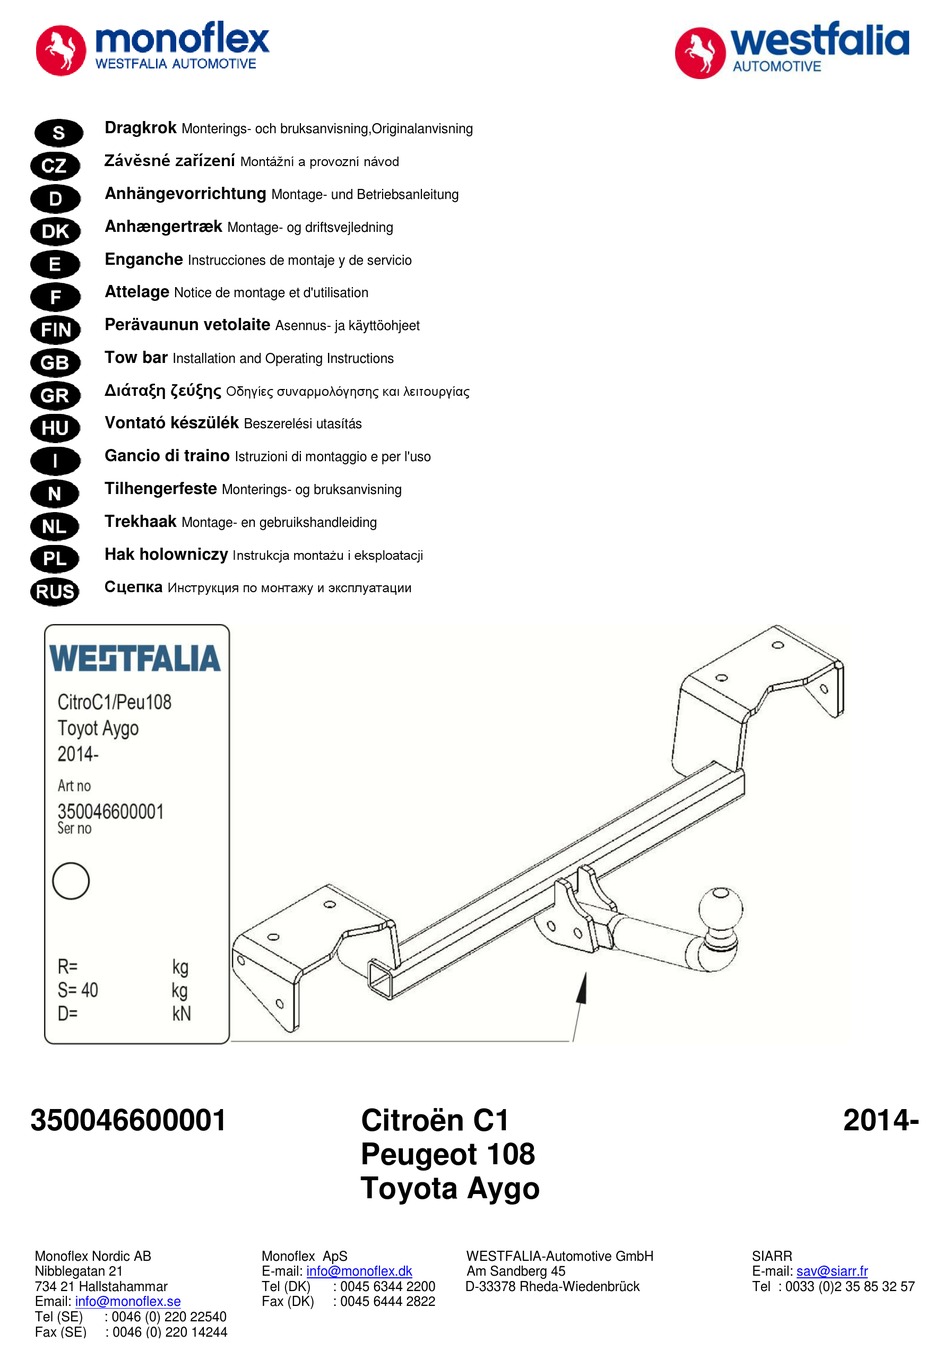 WESTFALIA MONOFLEX 350046600001 INSTALLATION AND OPERATING INSTRUCTIONS MANUAL Pdf Download |